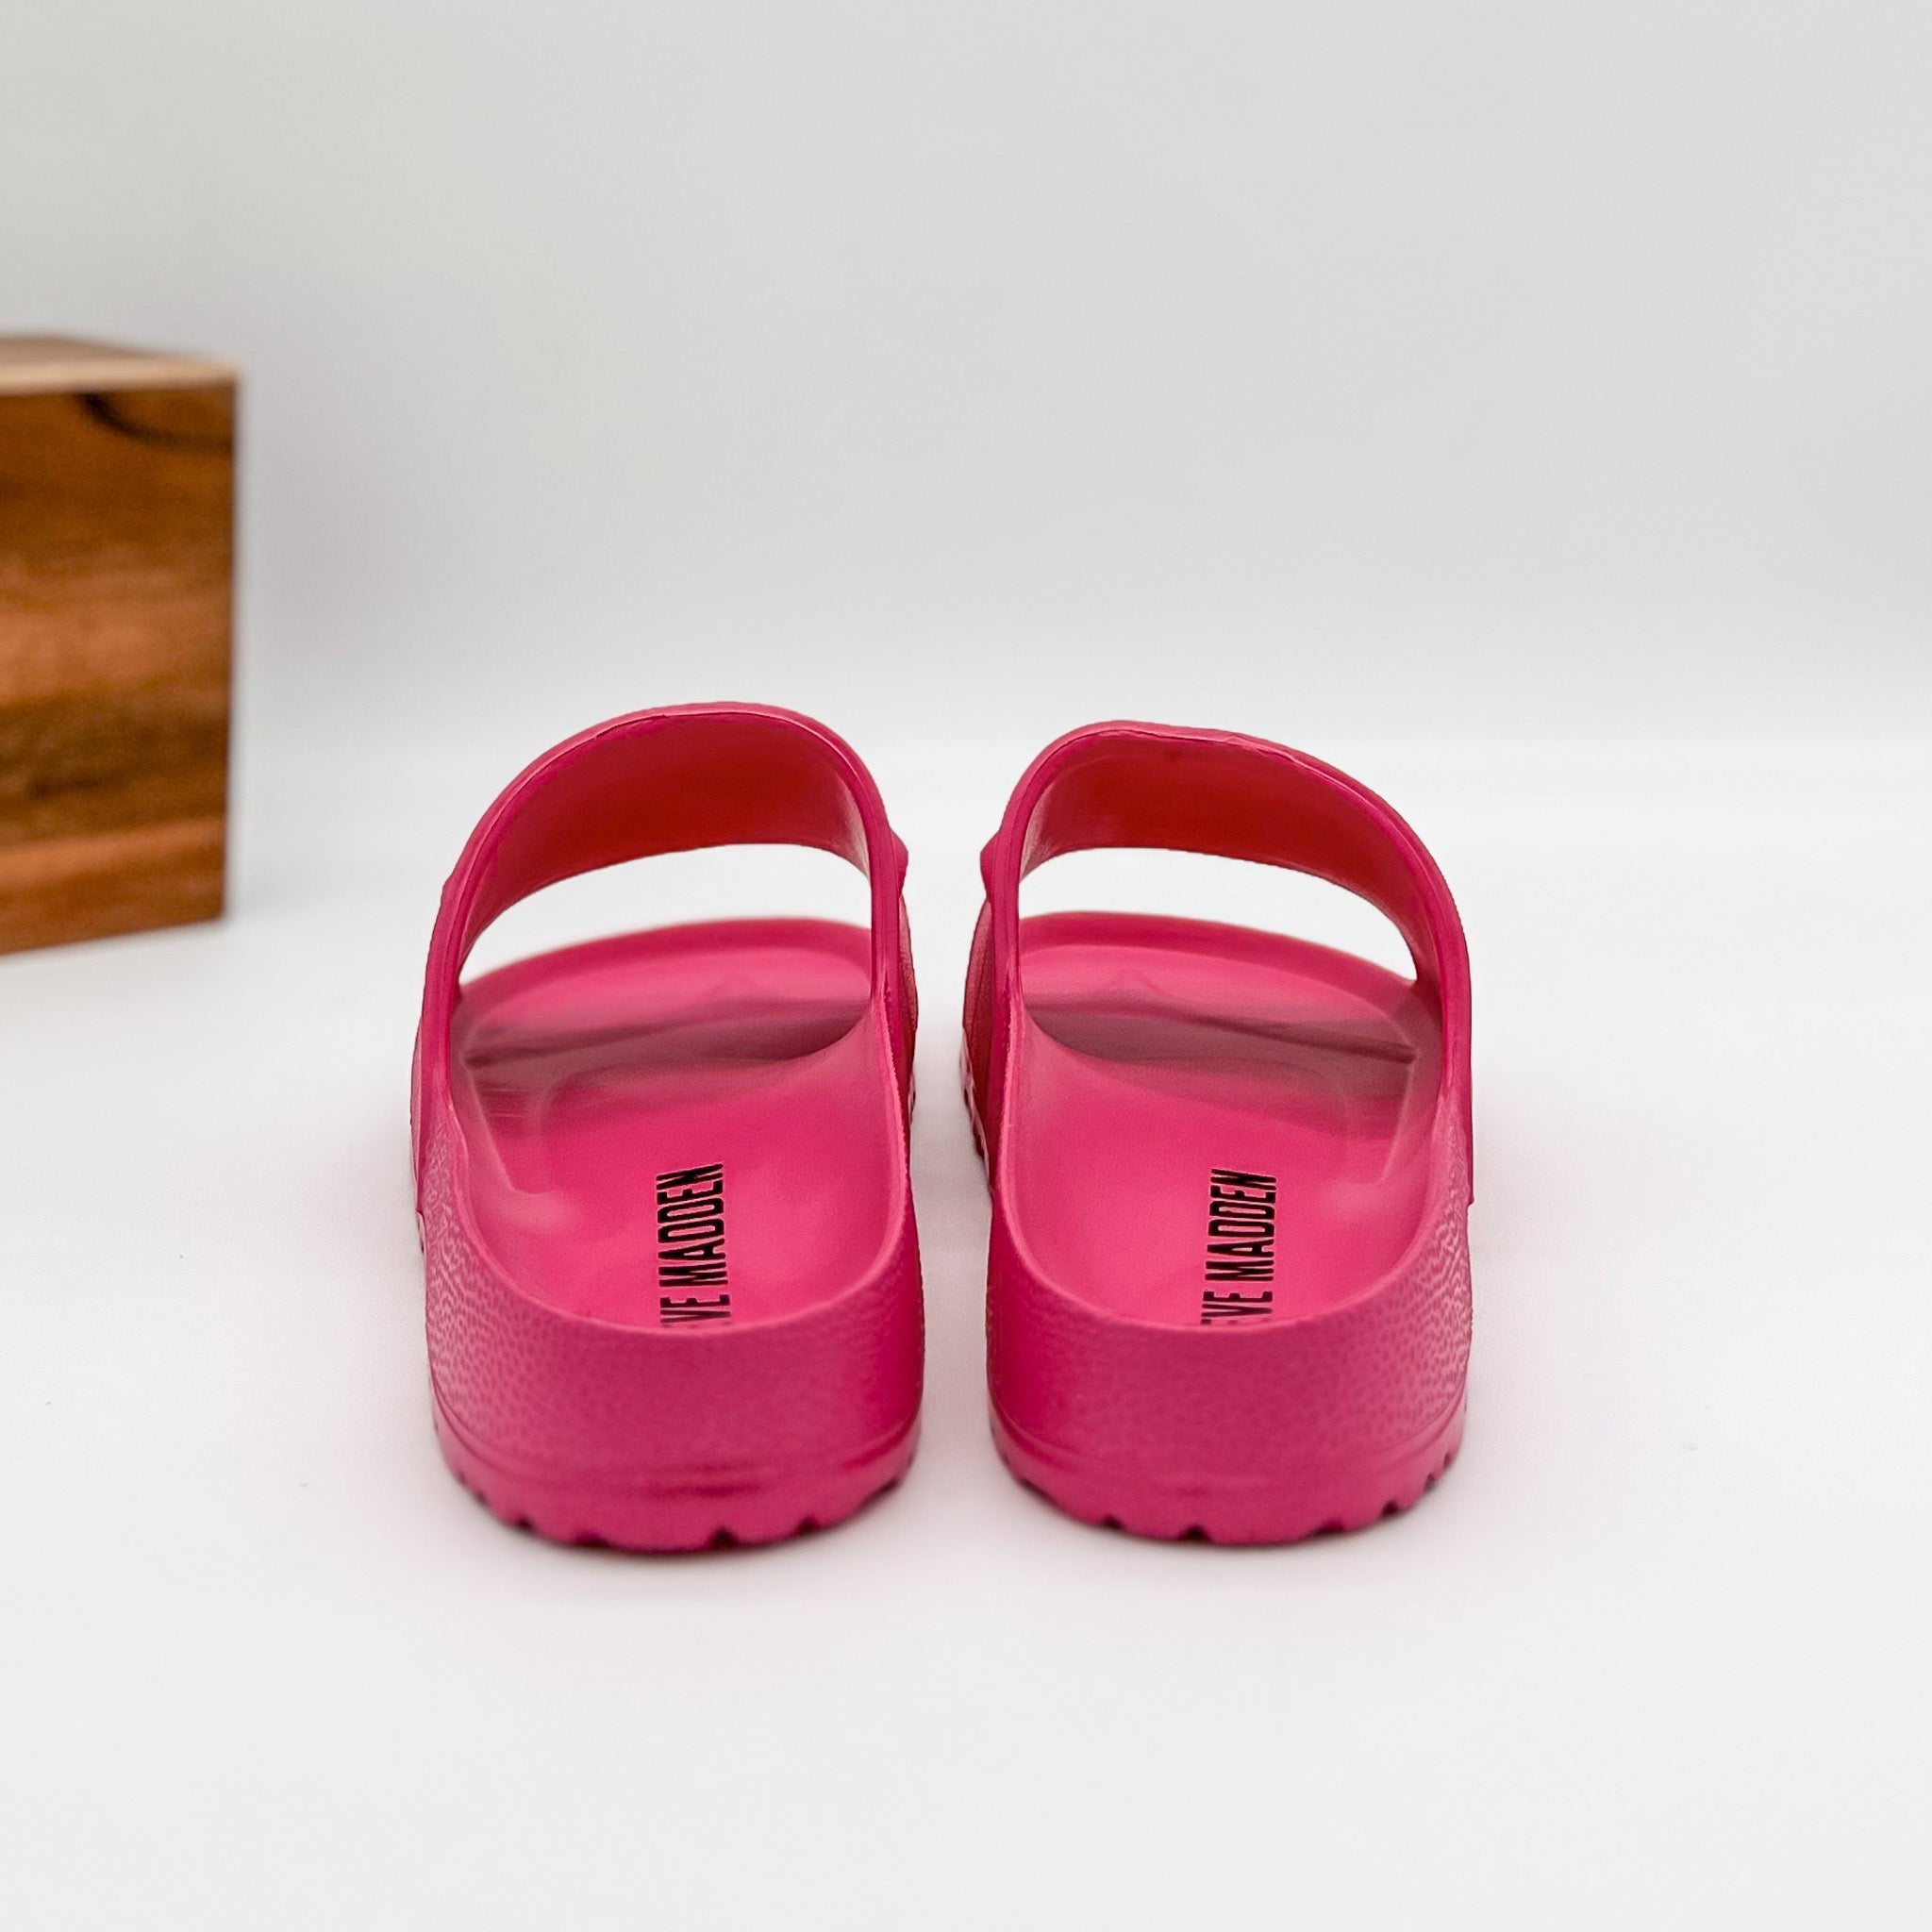 Steve Madden Gaby Sandals in Pink